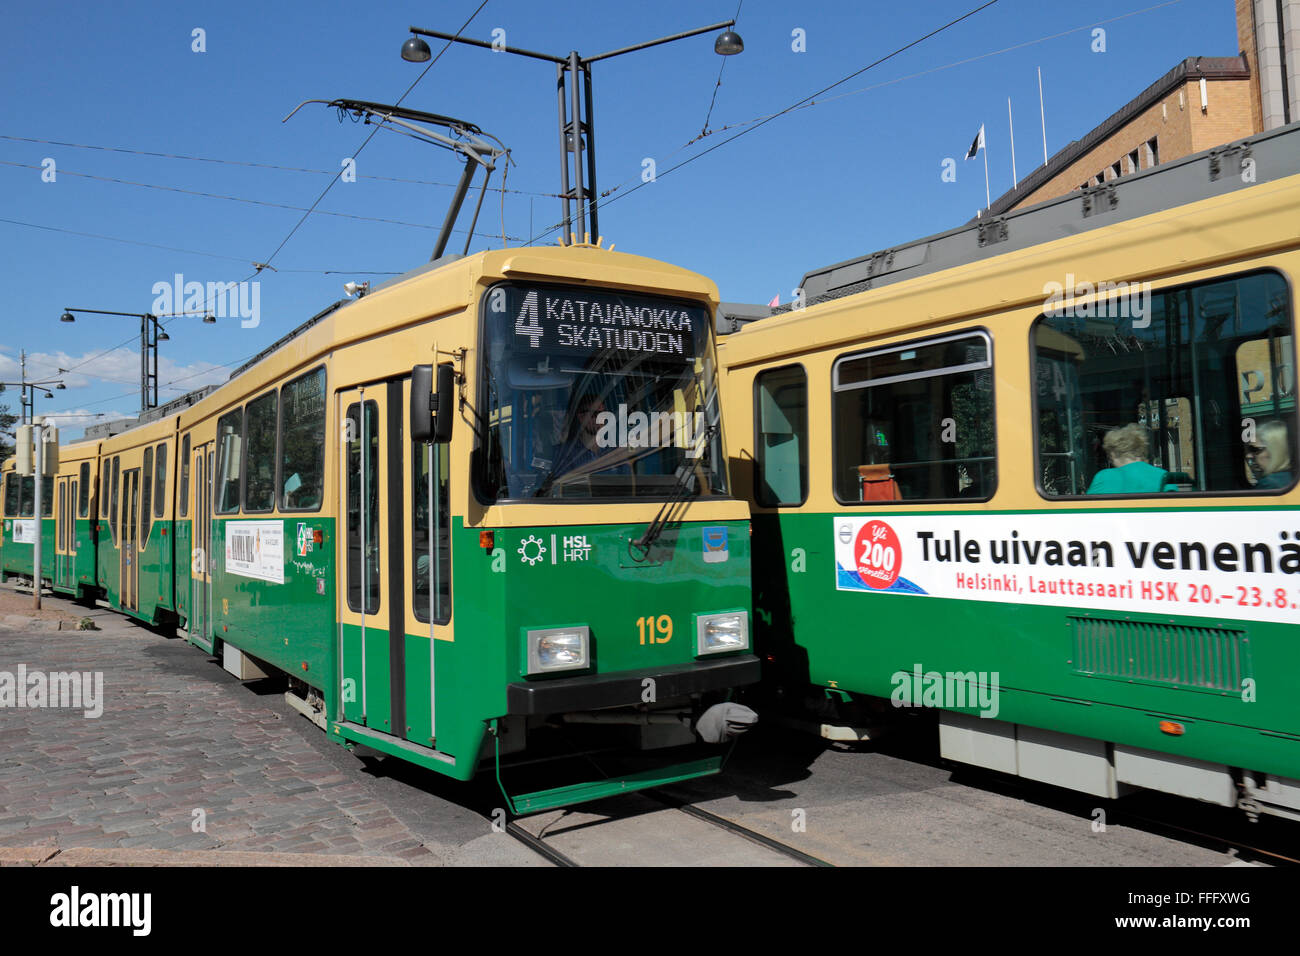 The No 4 electric tram operated by HSL (Helsingin Seudun Liikenne) in Helsinki, Finland. Stock Photo